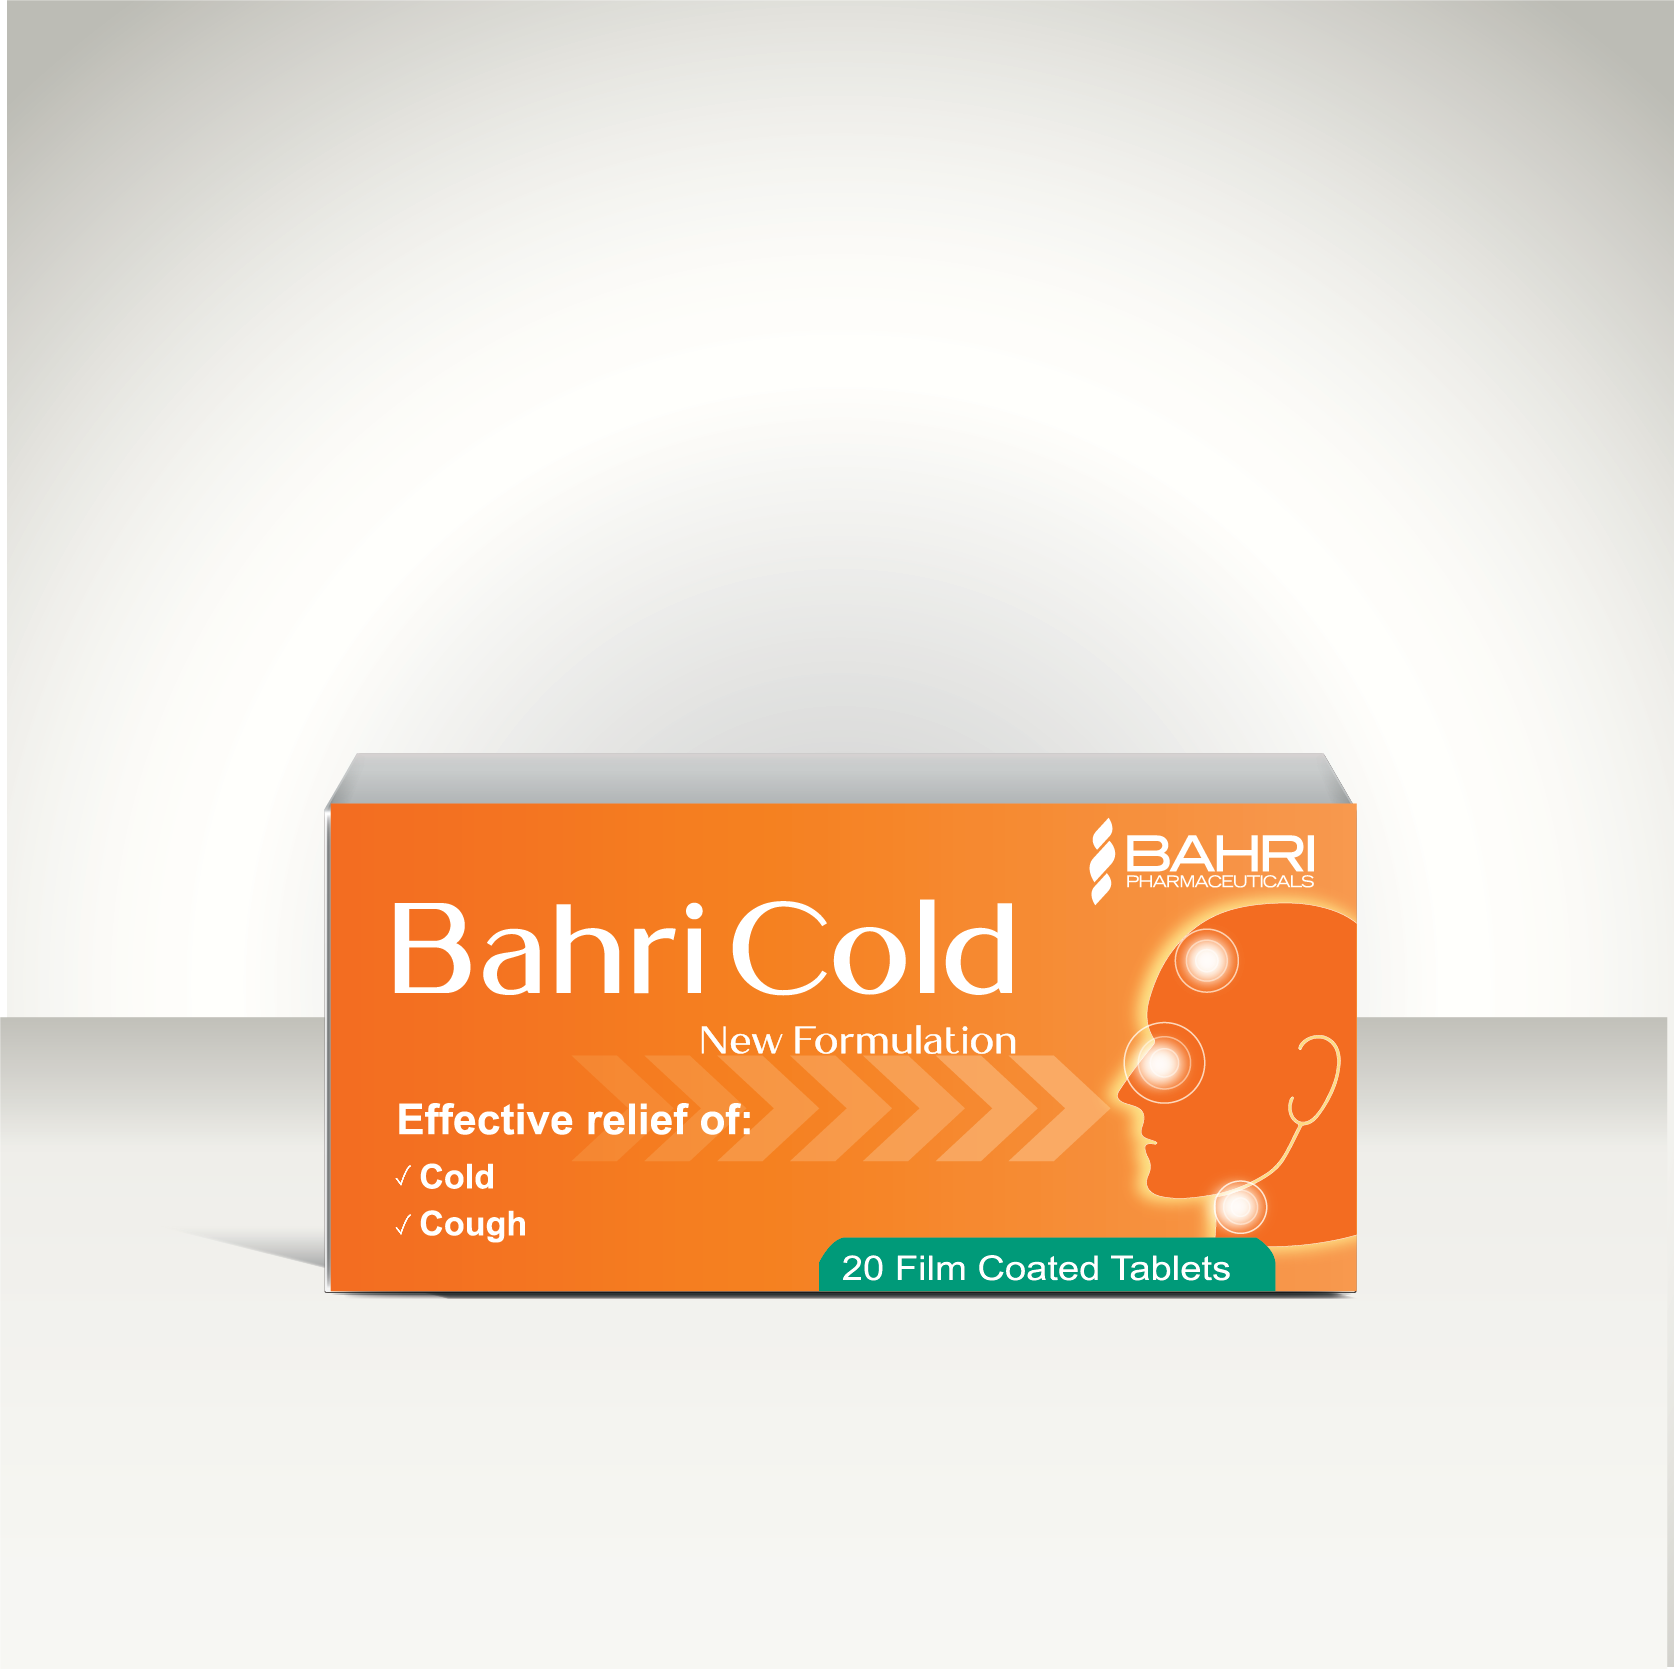 Bahri Cold